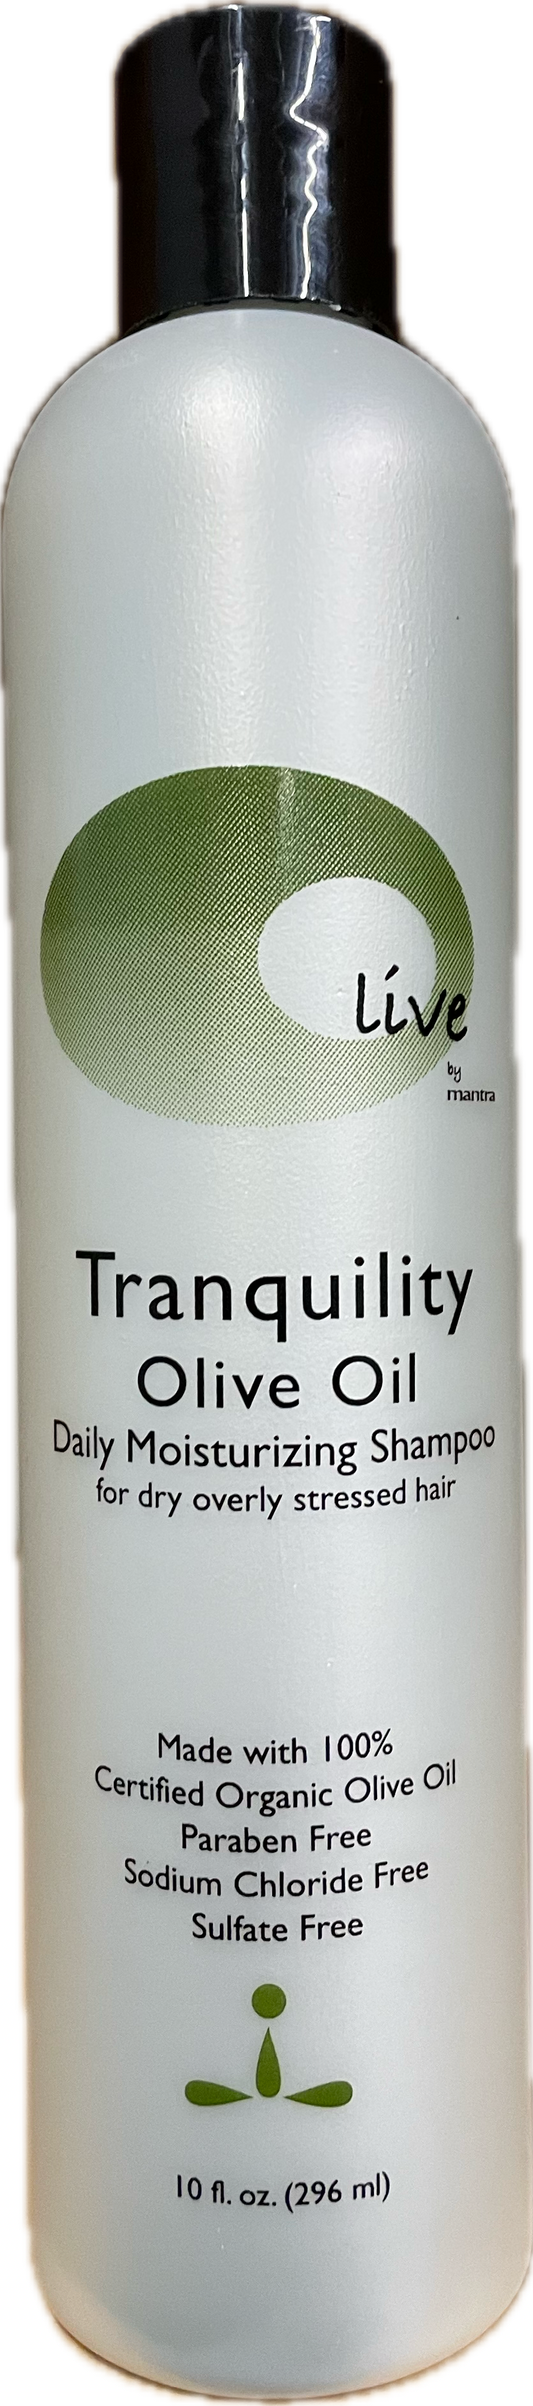 Tranquility moisture shampoo PROMO - Buy 4 Get 2 Free